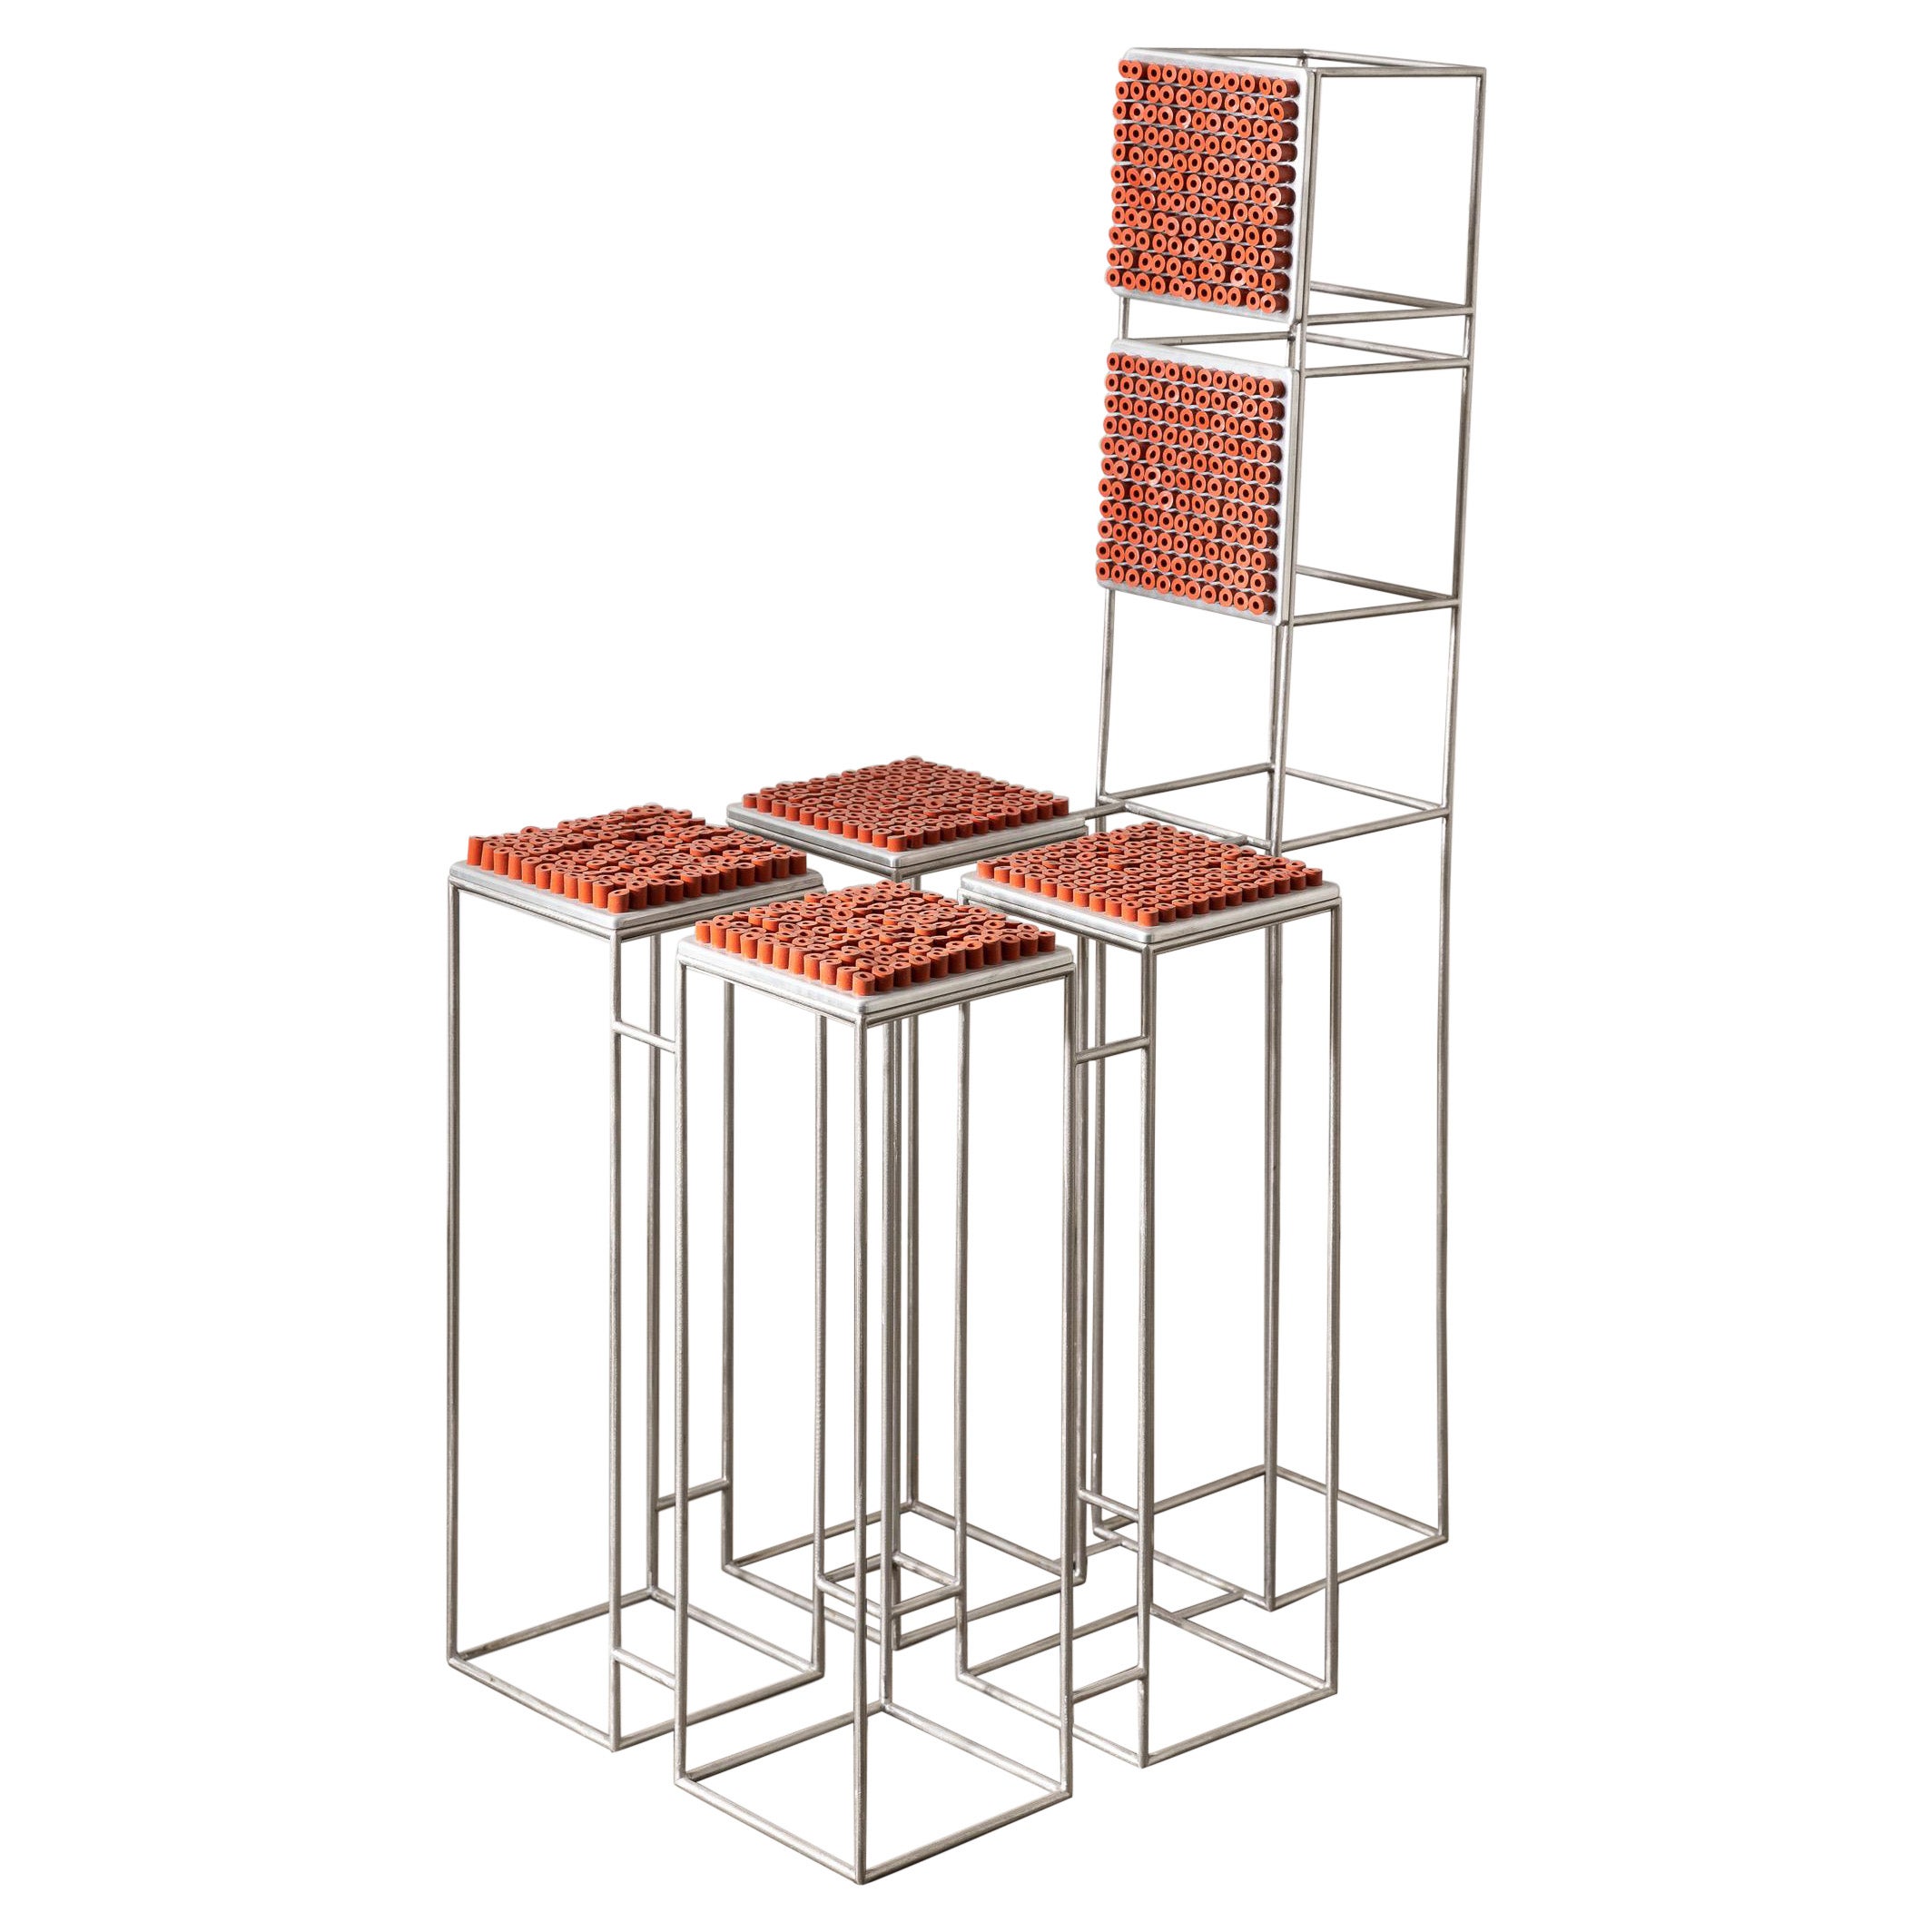 Grid Chair by Gentner Design